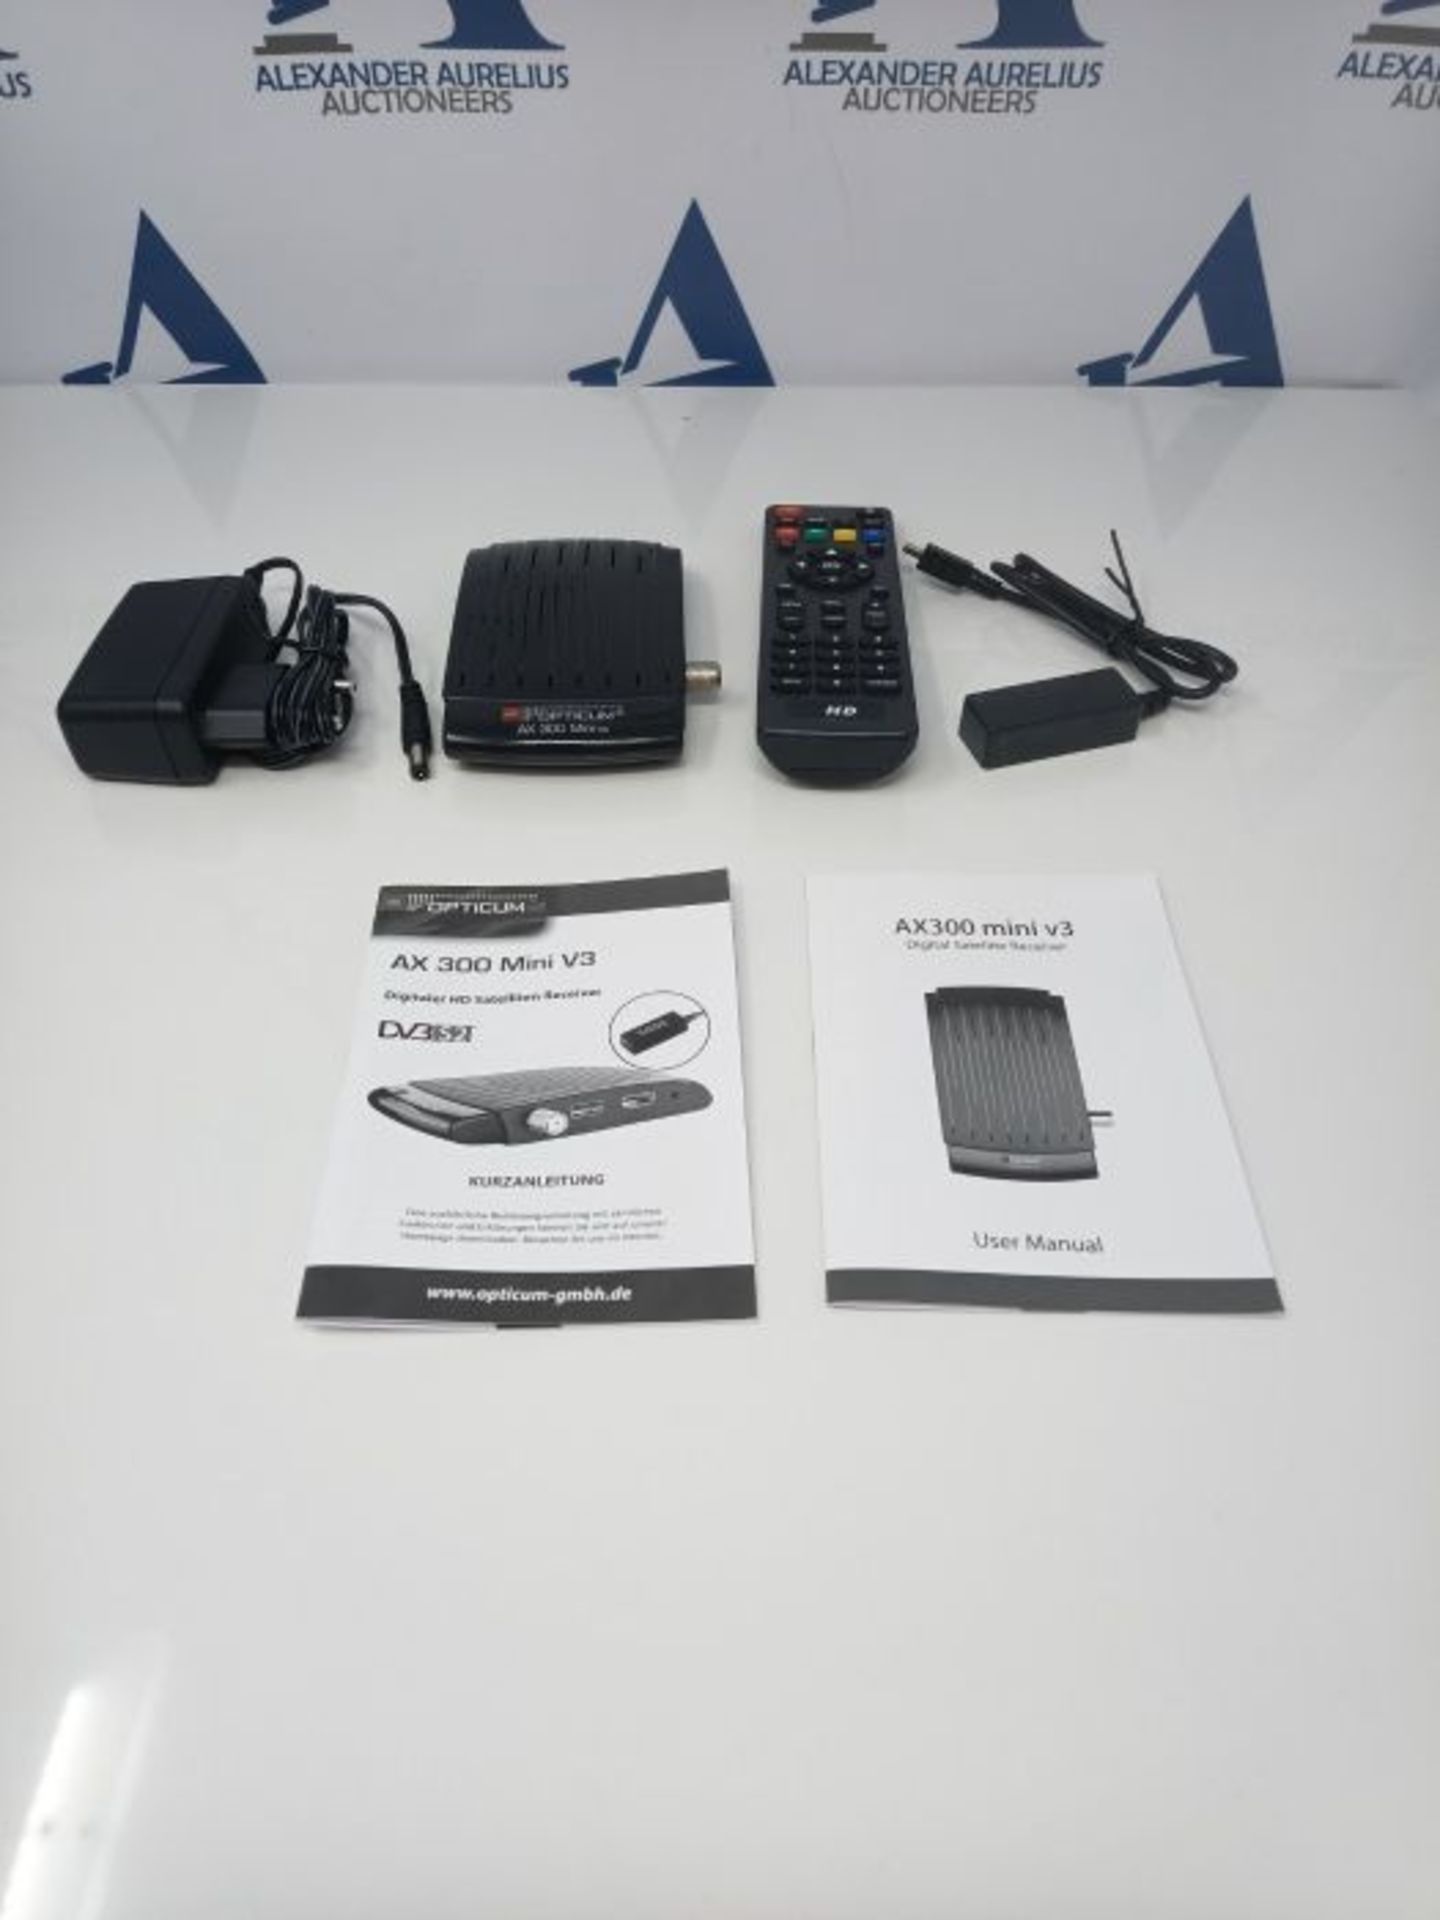 RED OPTICUM AX 300 Mini V3 Sat Receiver I Digital Satellite Receiver HD - External IR - Image 3 of 3